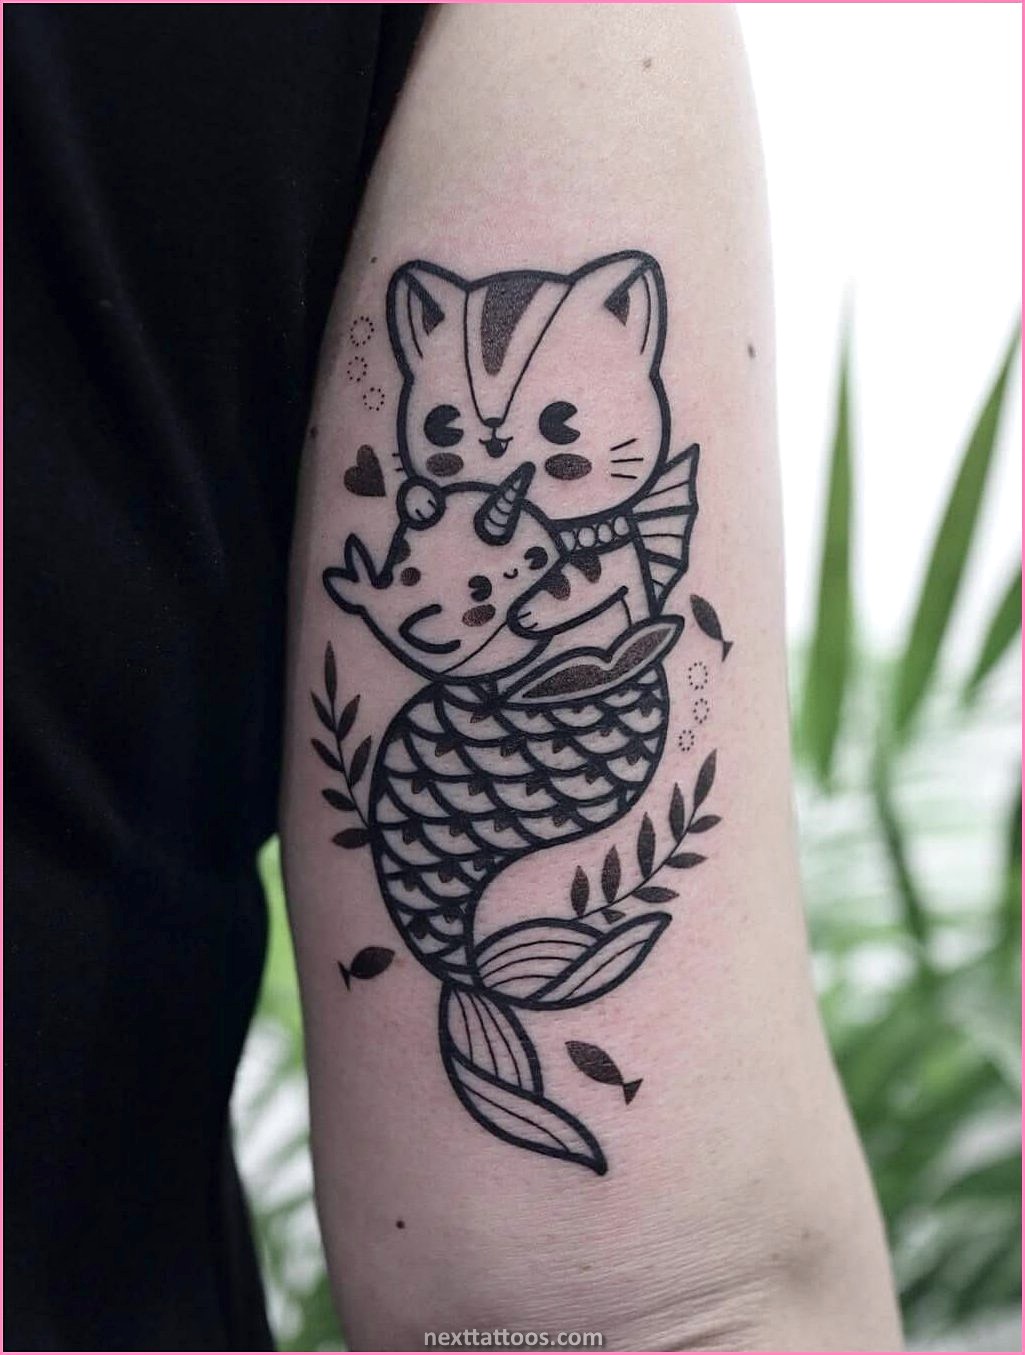 Cute Cartoon Character Tattoos For Small Tattoos